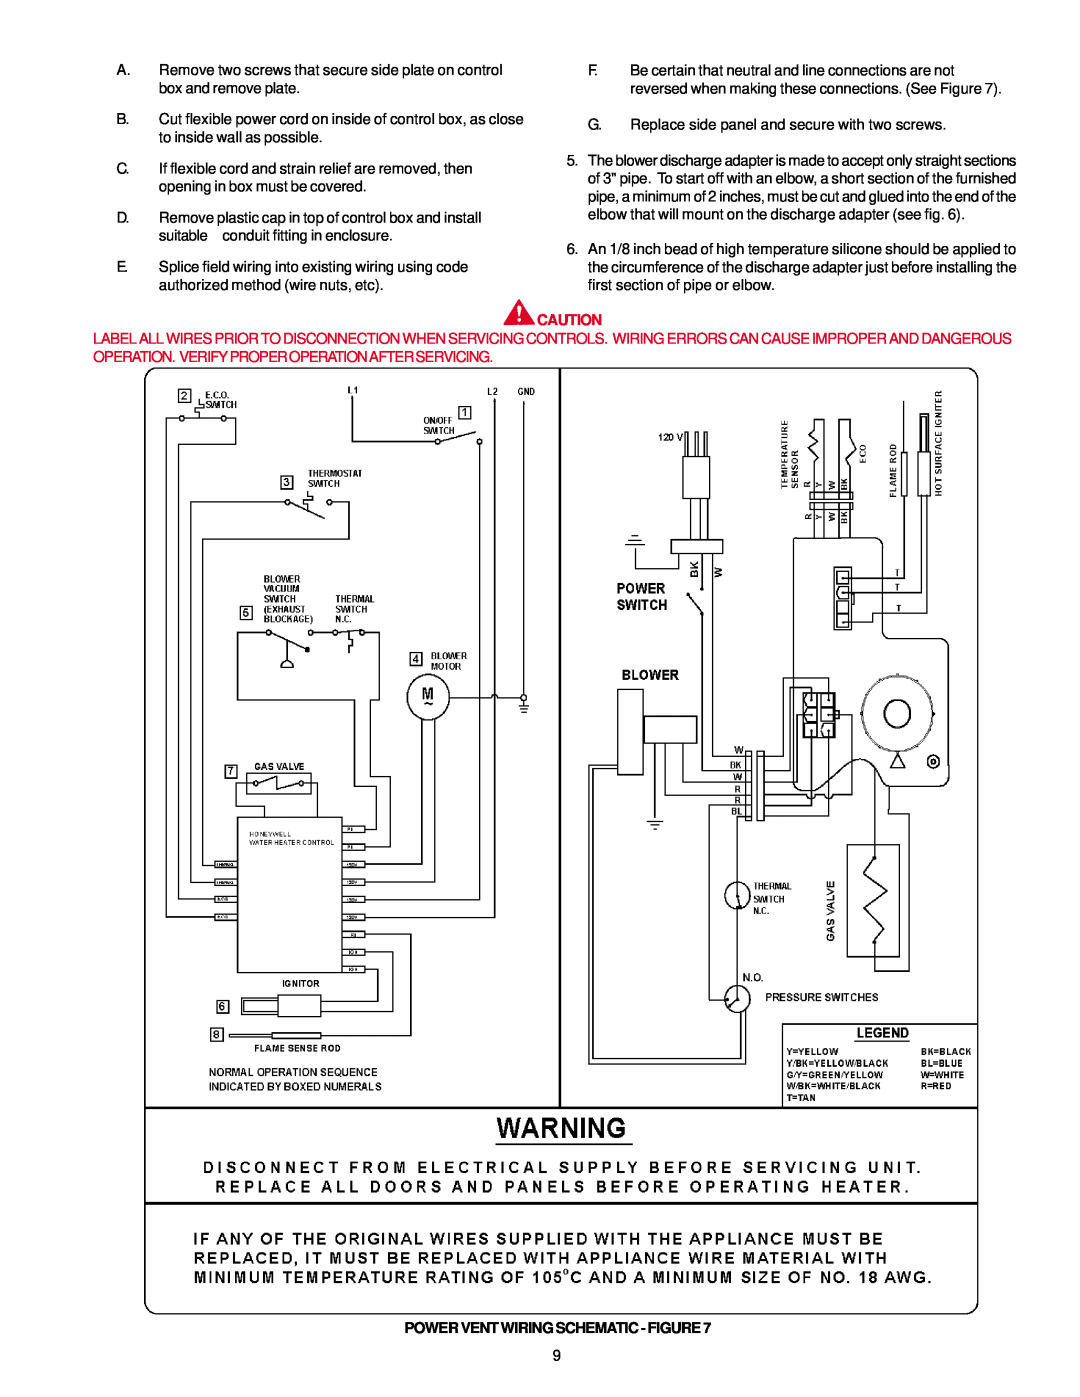 A.O. Smith BTF-75 warranty Power Vent Wiring Schematic - Figure 